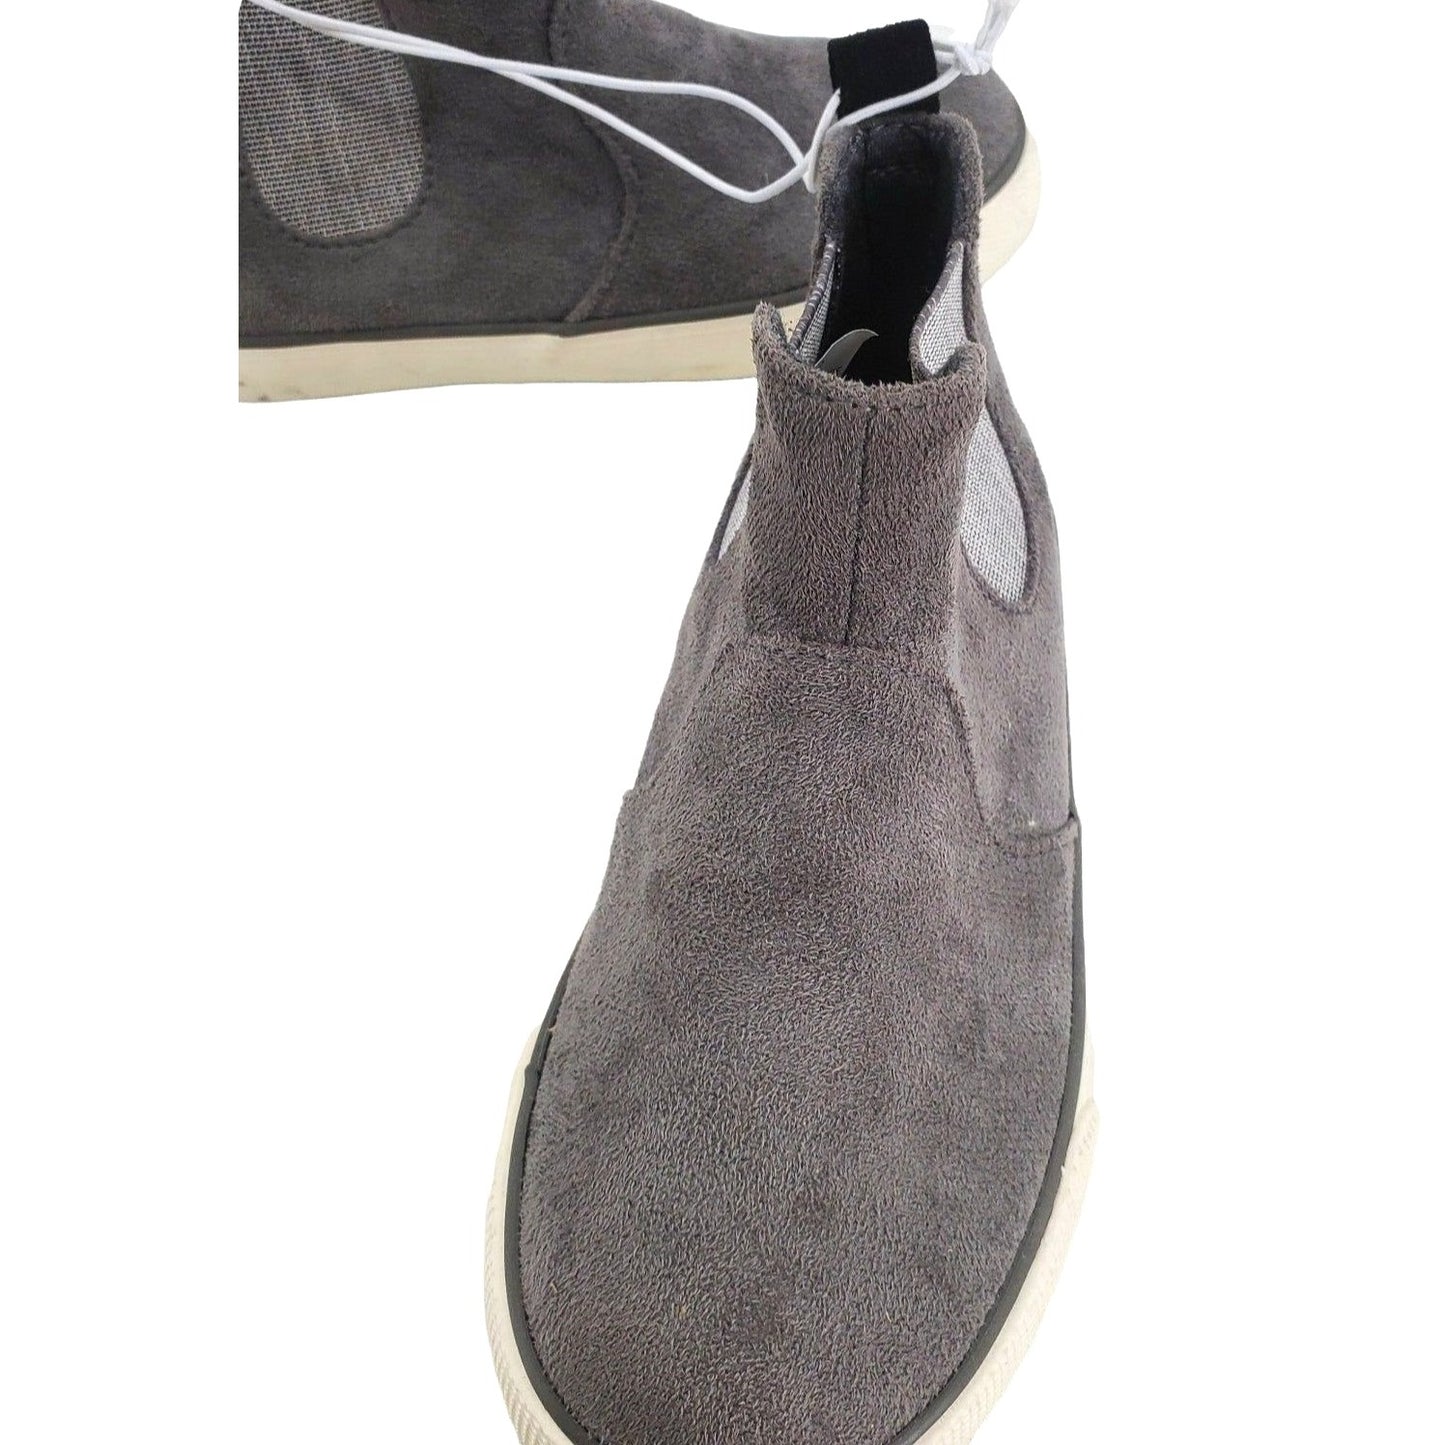 CAT & JACK Boots ANTON high-top Suede shoes Slip-on Sneakers Walker